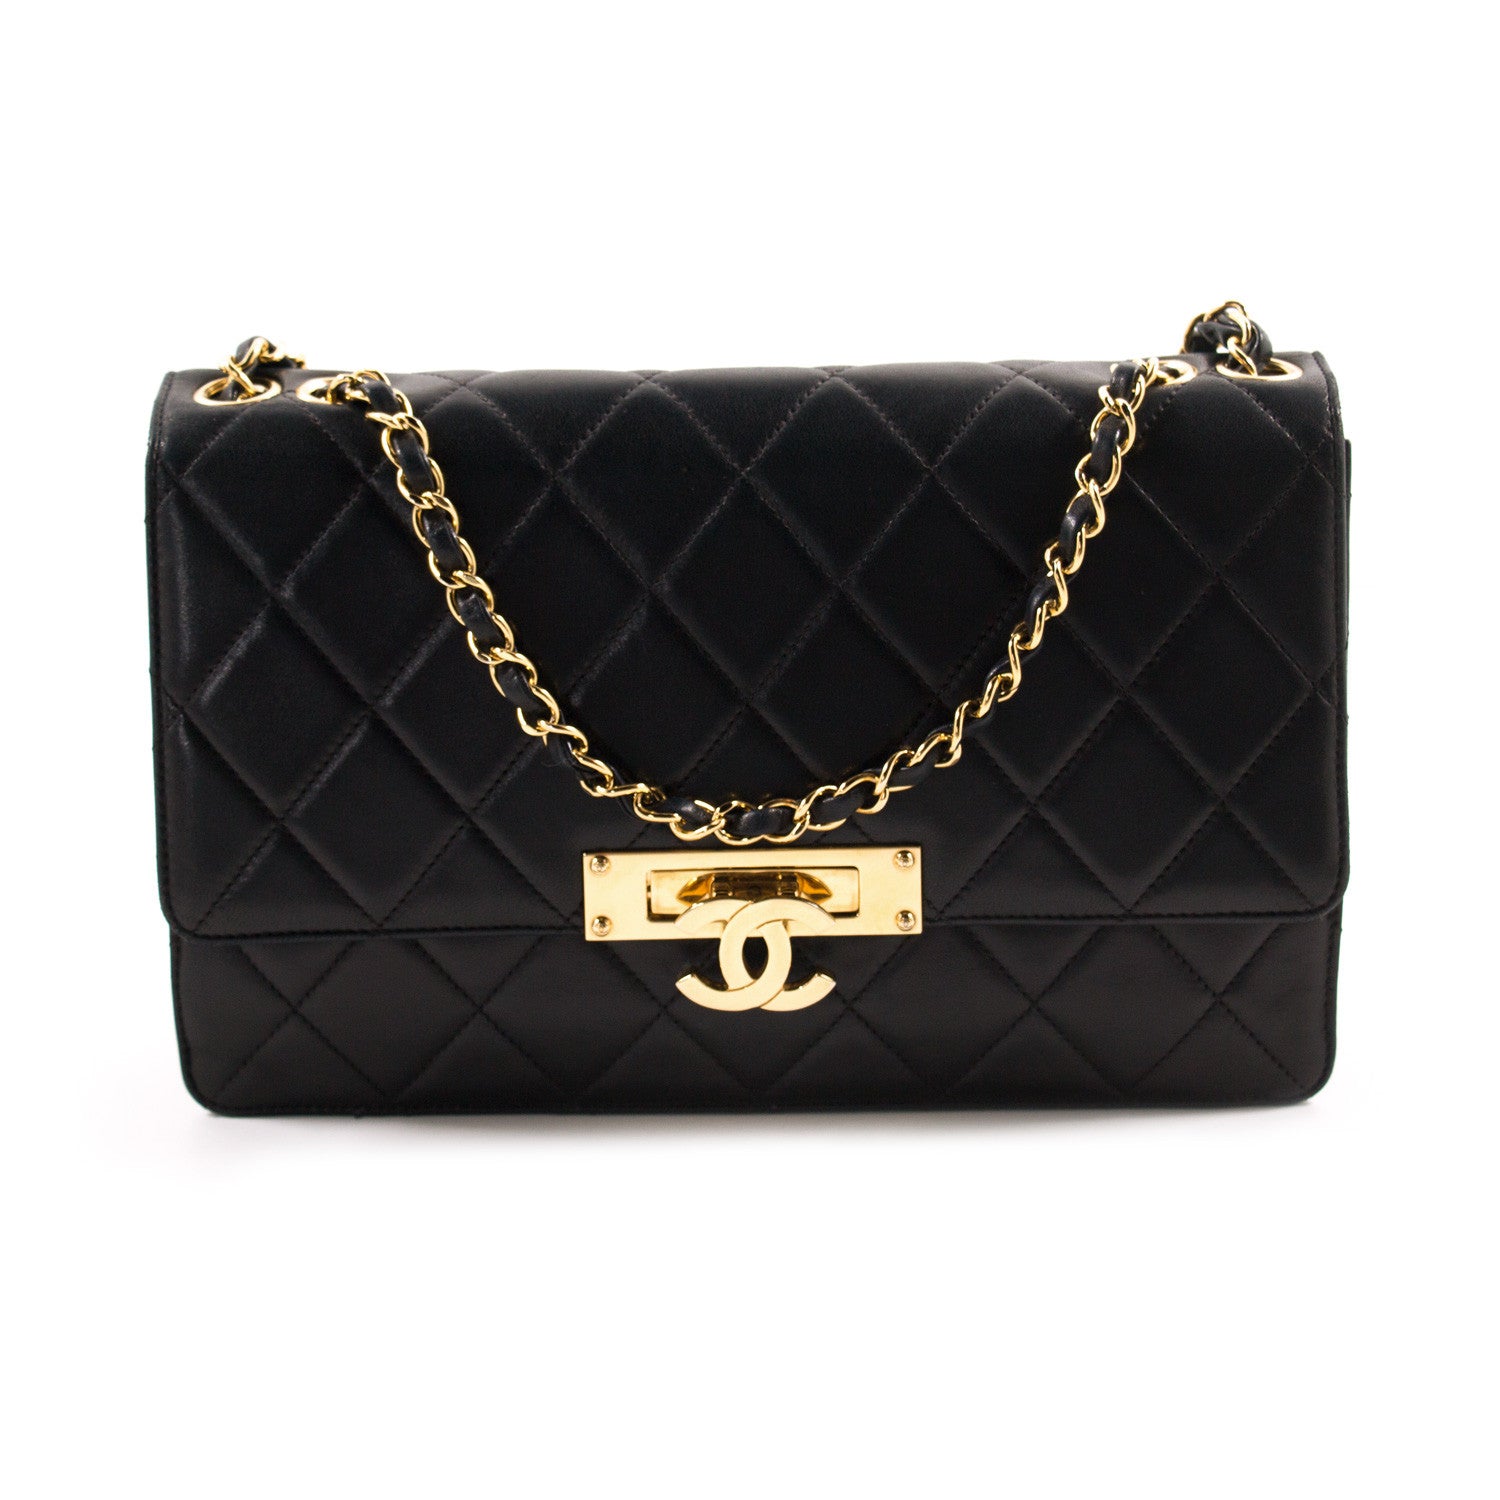 Beautiful Chanel Flap bag herringbone handbag in golden beige